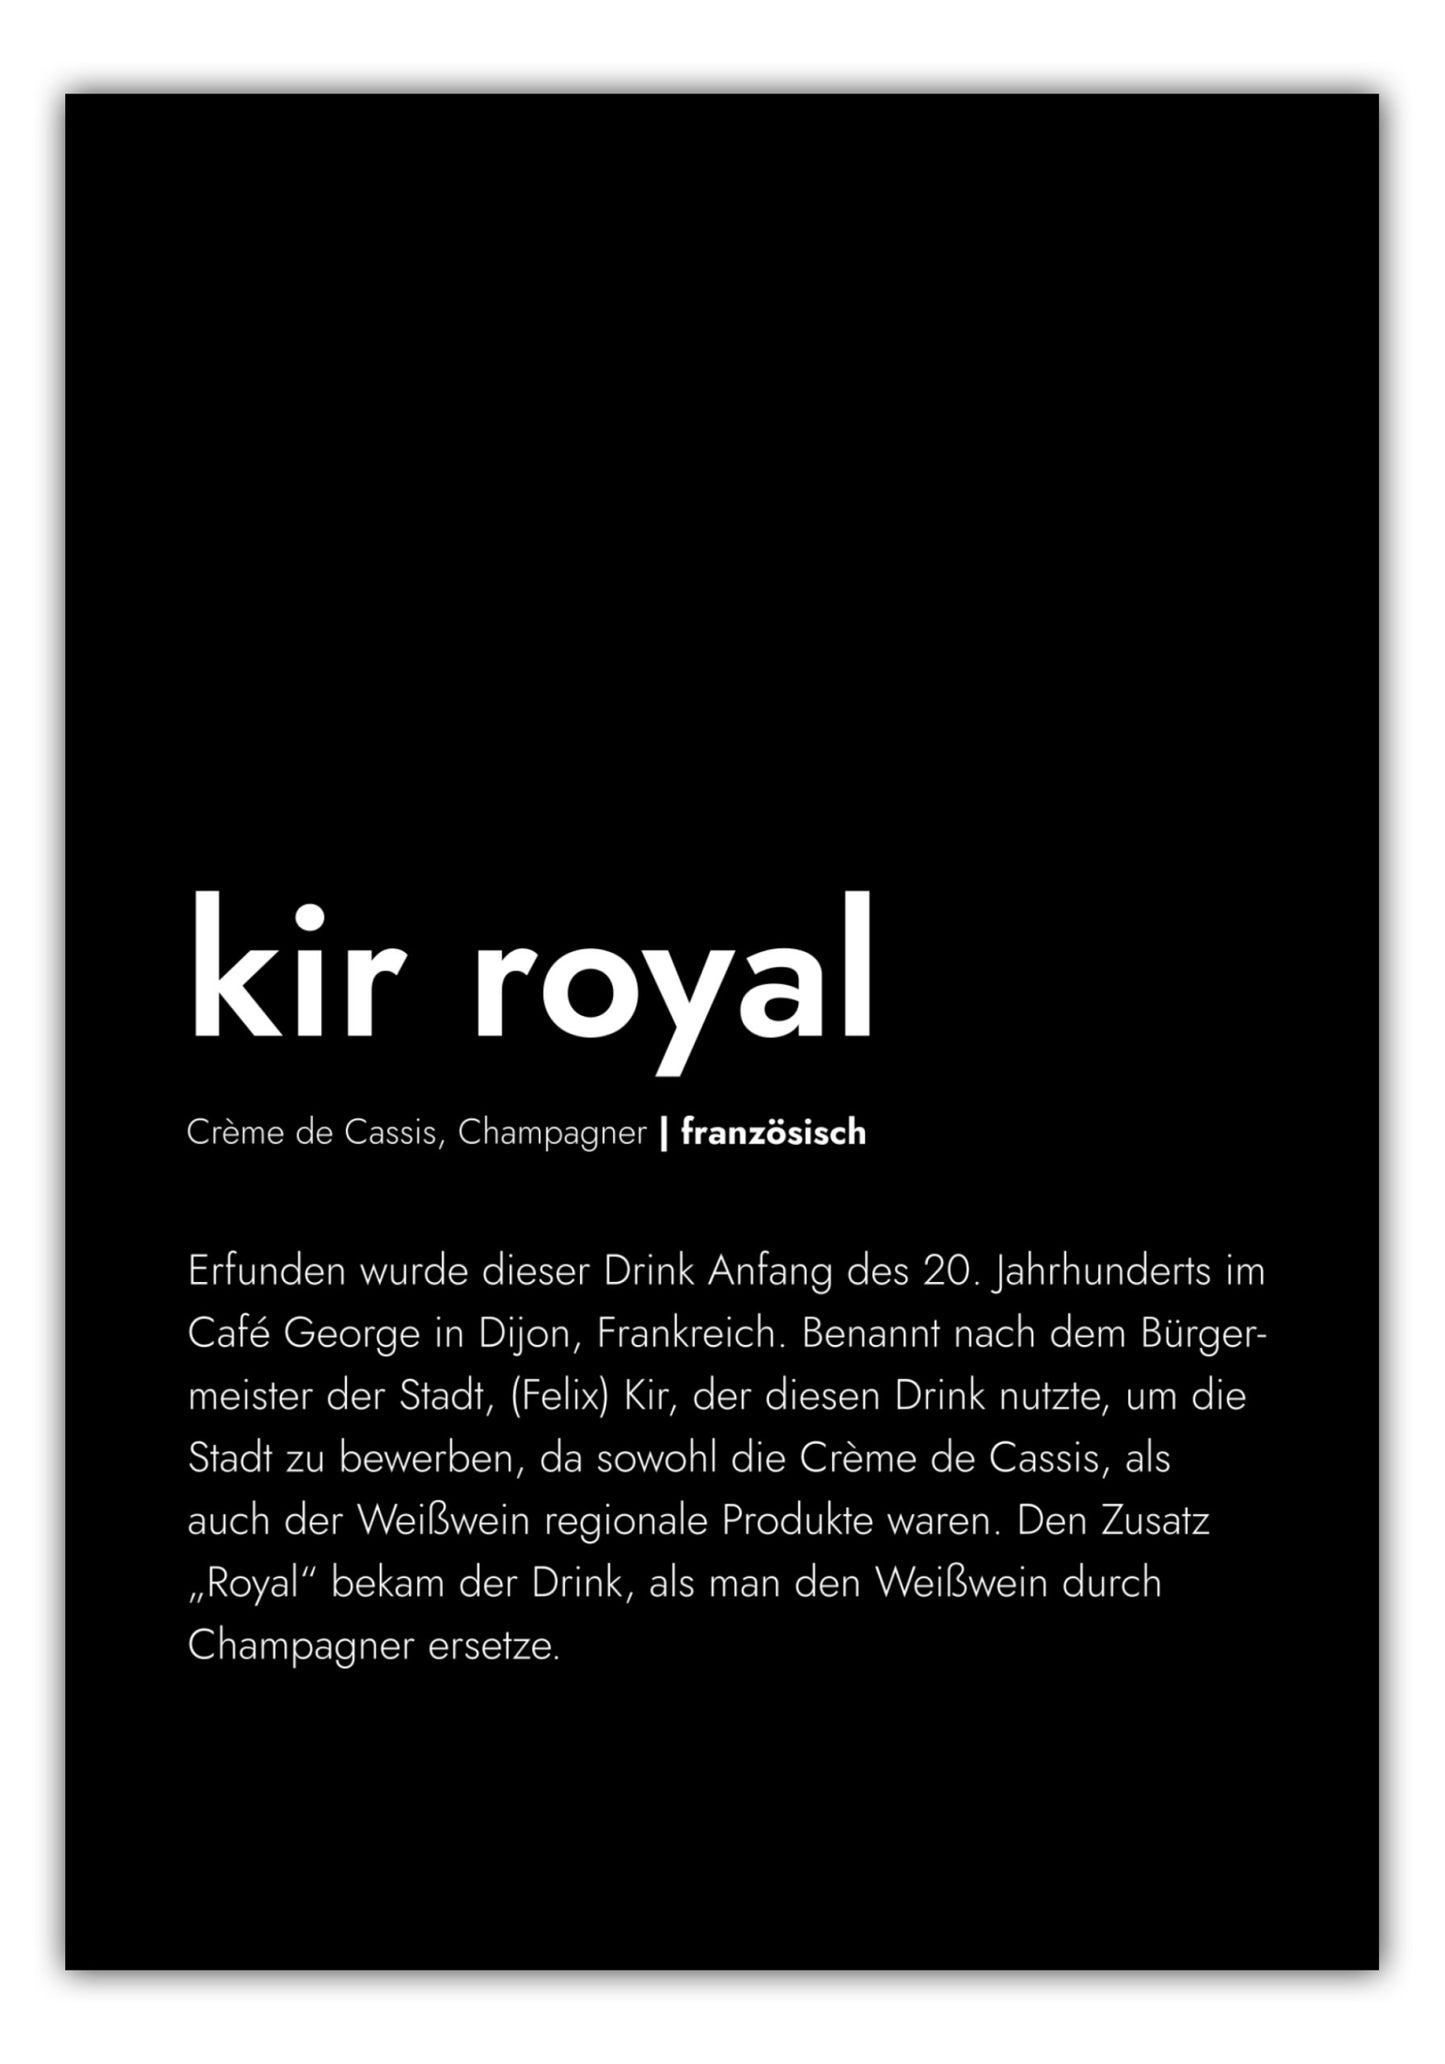 Poster Kir Royal - Definition